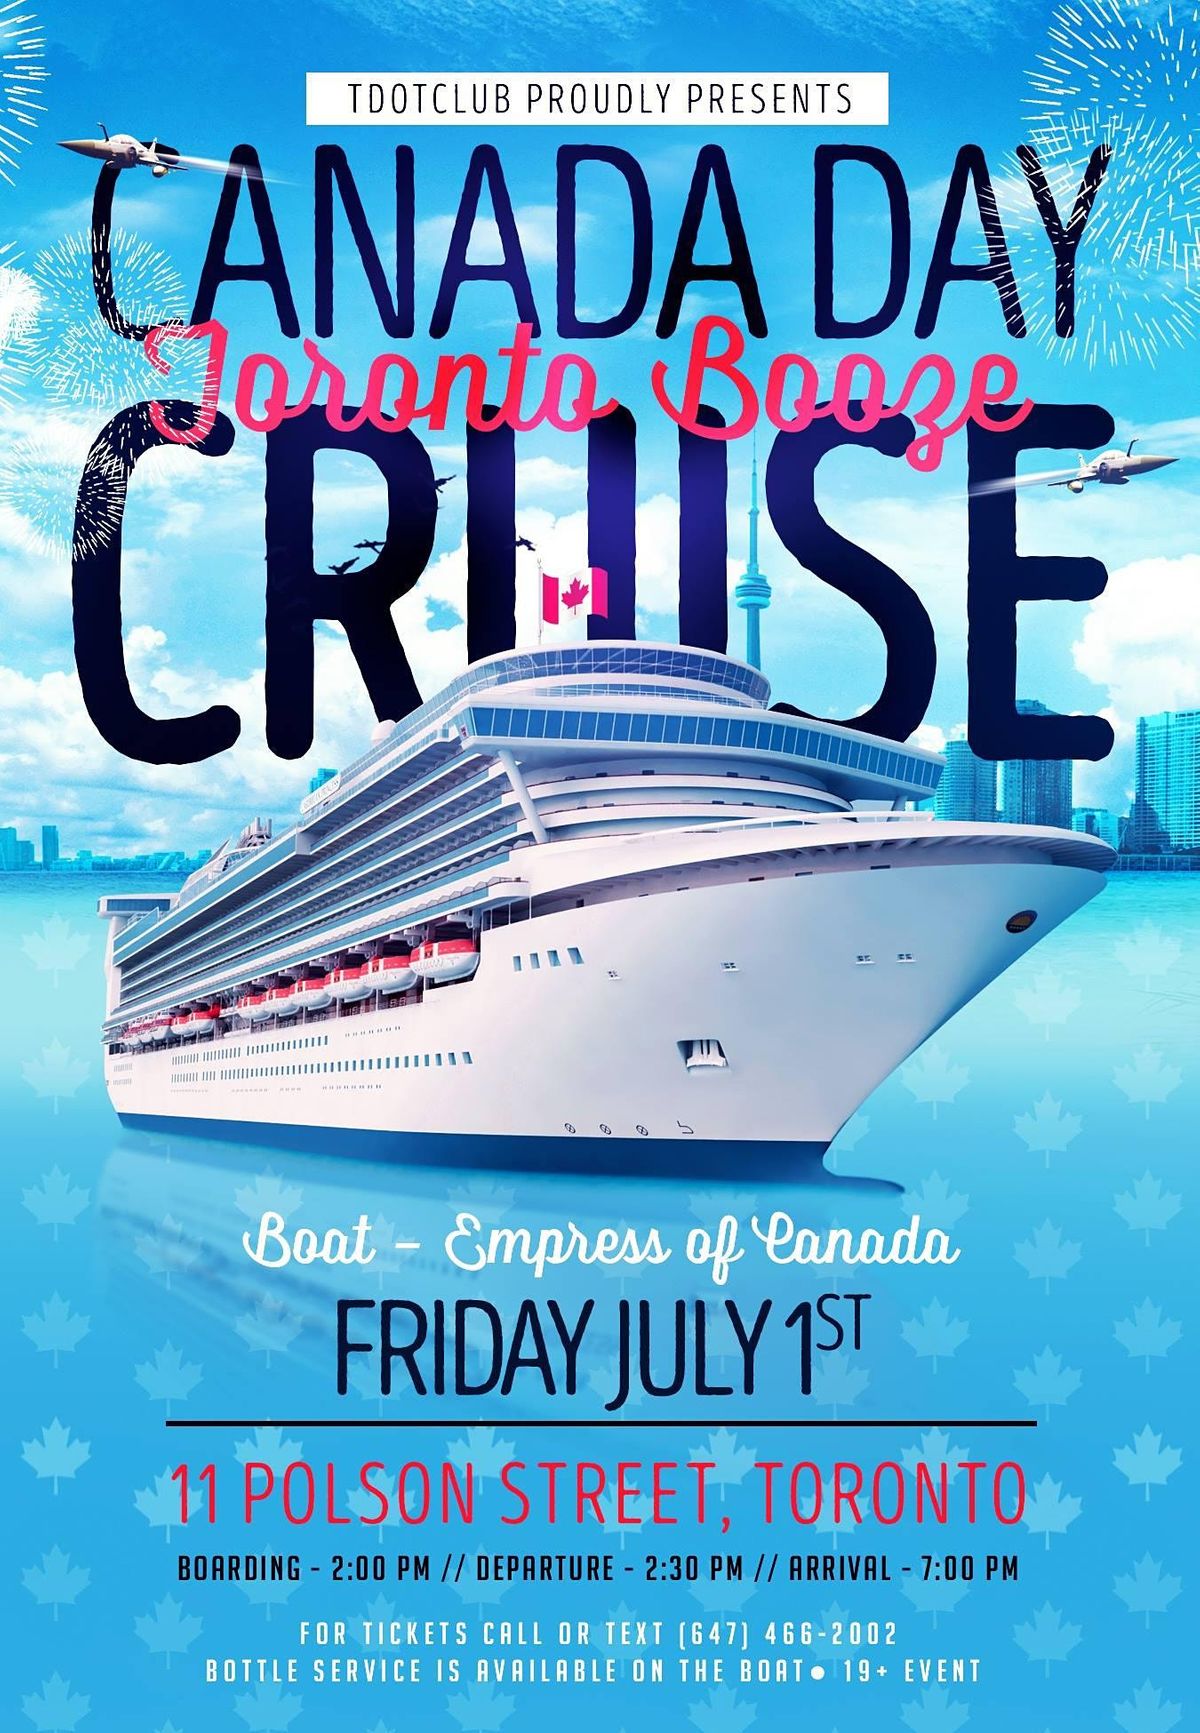 Toronto Canada Day Booze Cruise 2022 The Empress of Canada, Toronto